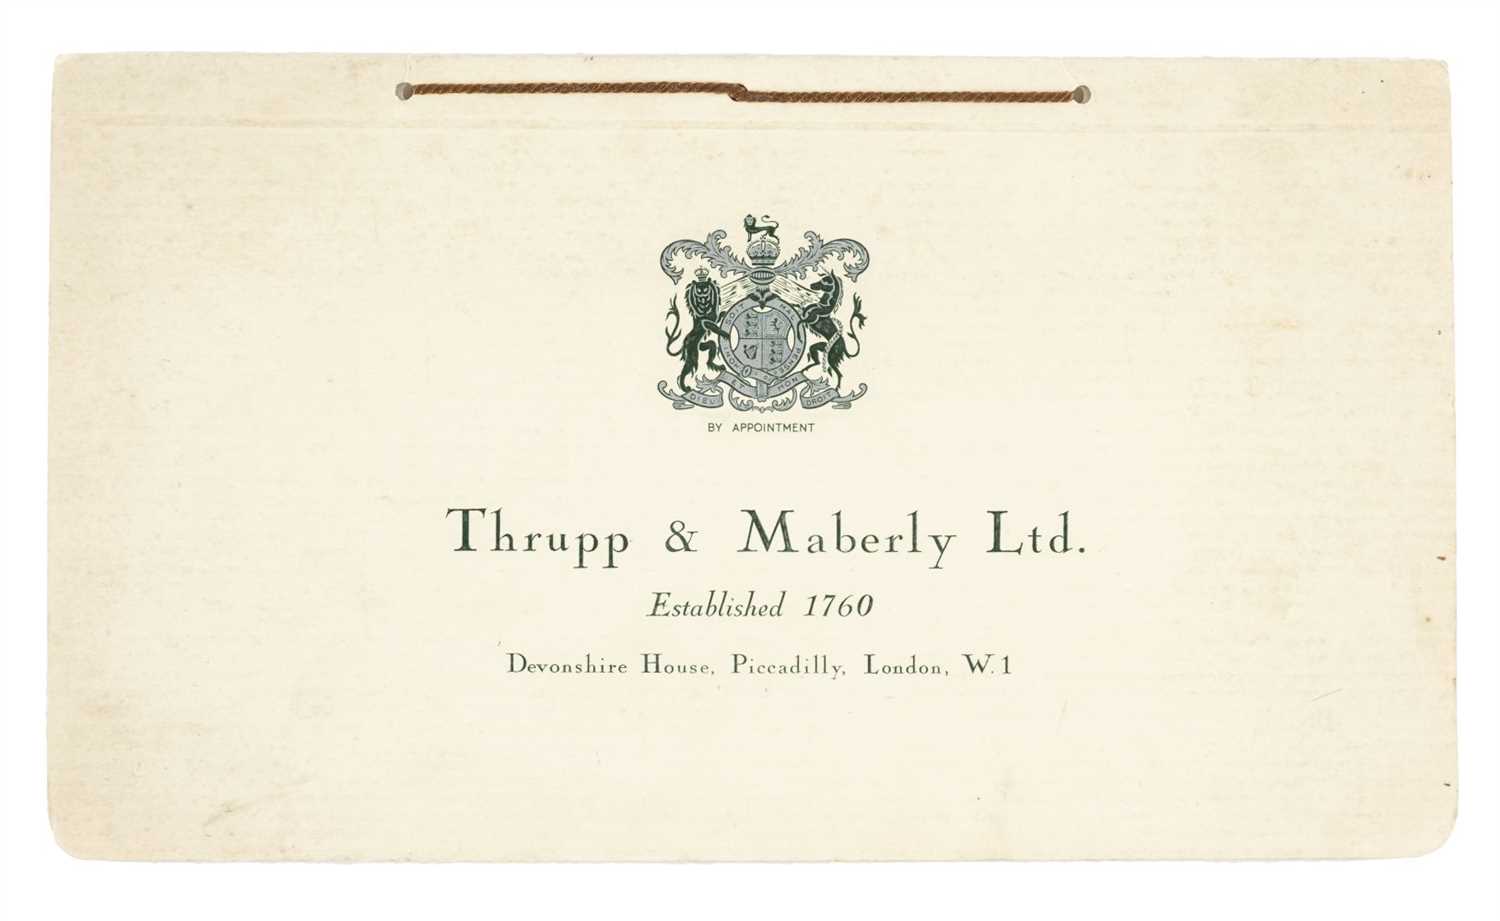 Lot 33 - Rolls-Royce. Thrupp & Maberly Ltd coachwork brochure for Rolls-Royce, circa 1936-1938